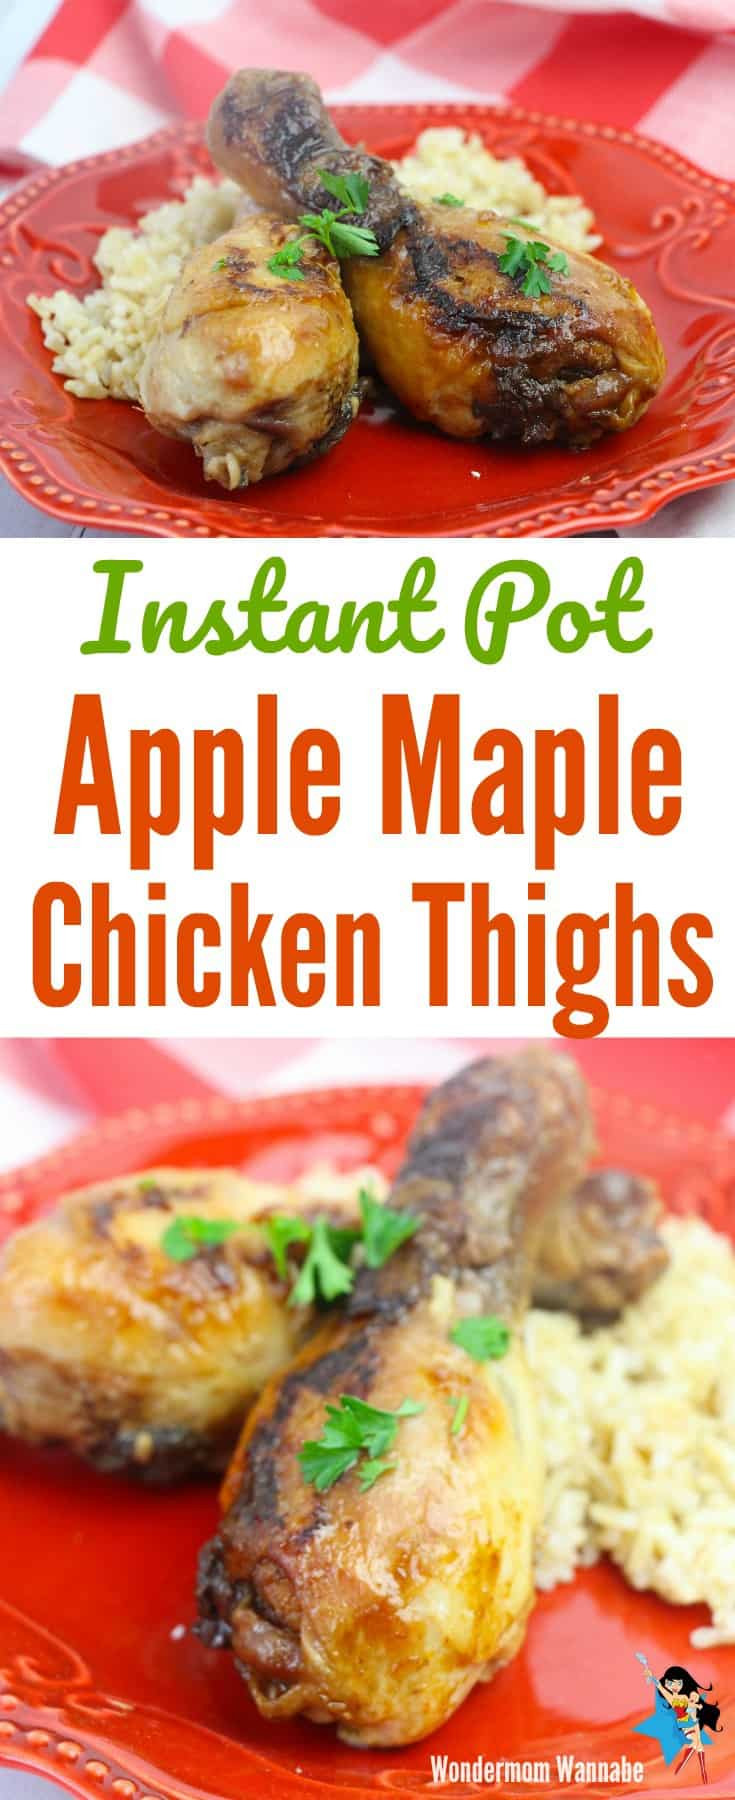 Chicken Thighs Instant Pot
 Instant Pot Apple Maple Chicken Thighs